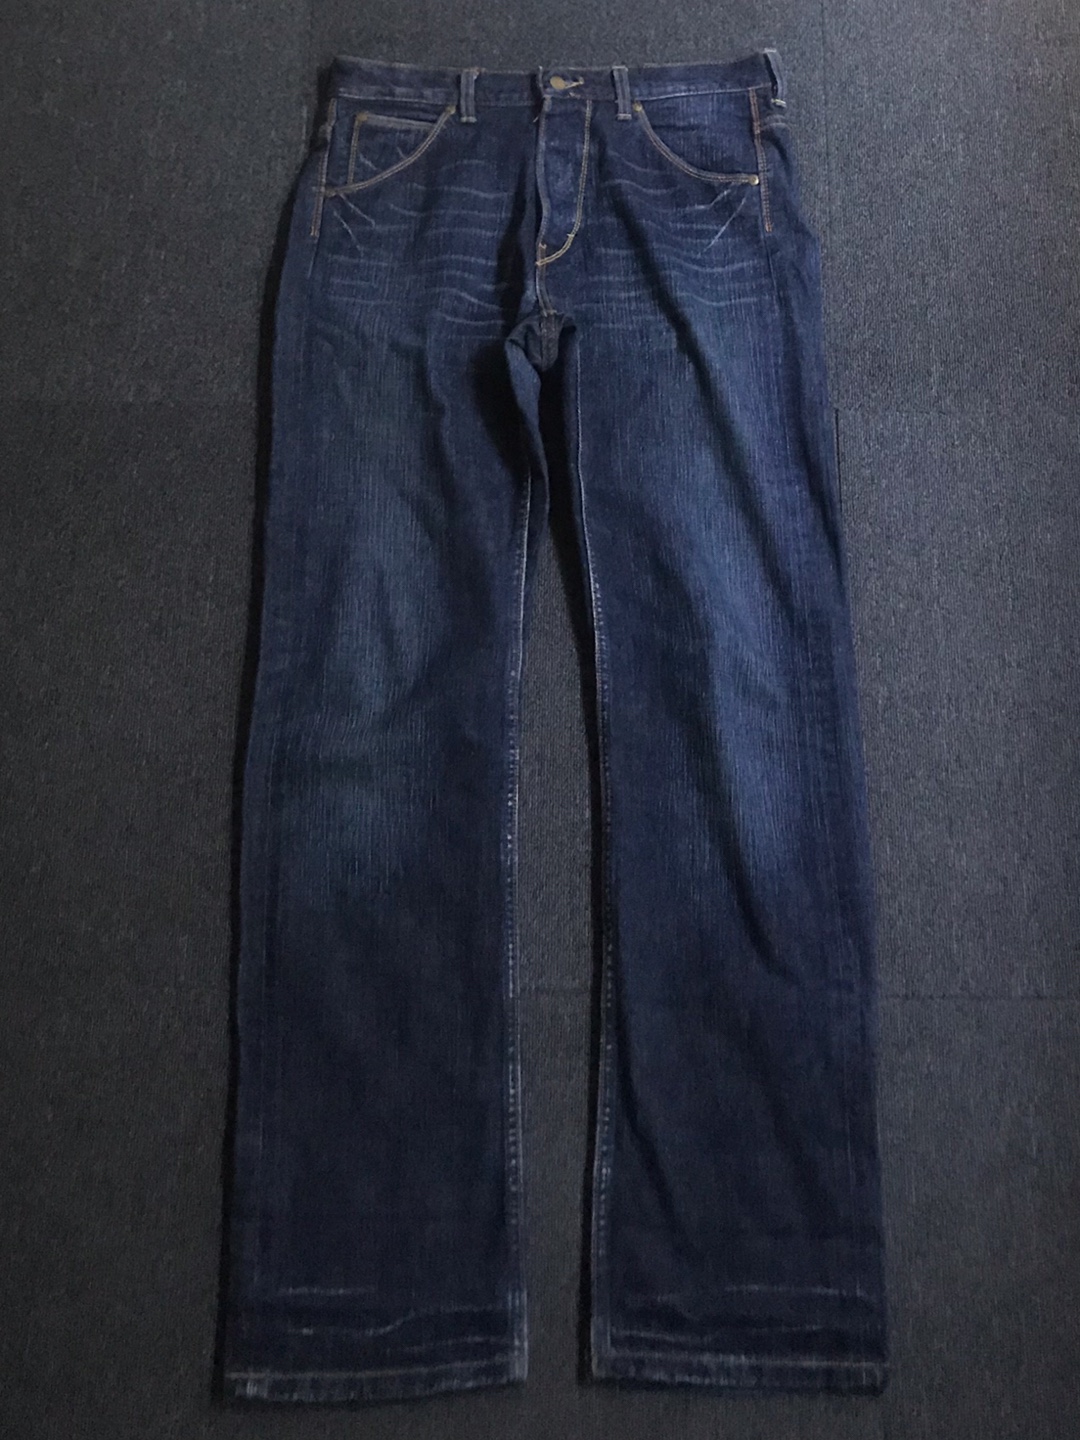 lee 101b half selvedge jeans (33/34 size, ~34인치 추천)